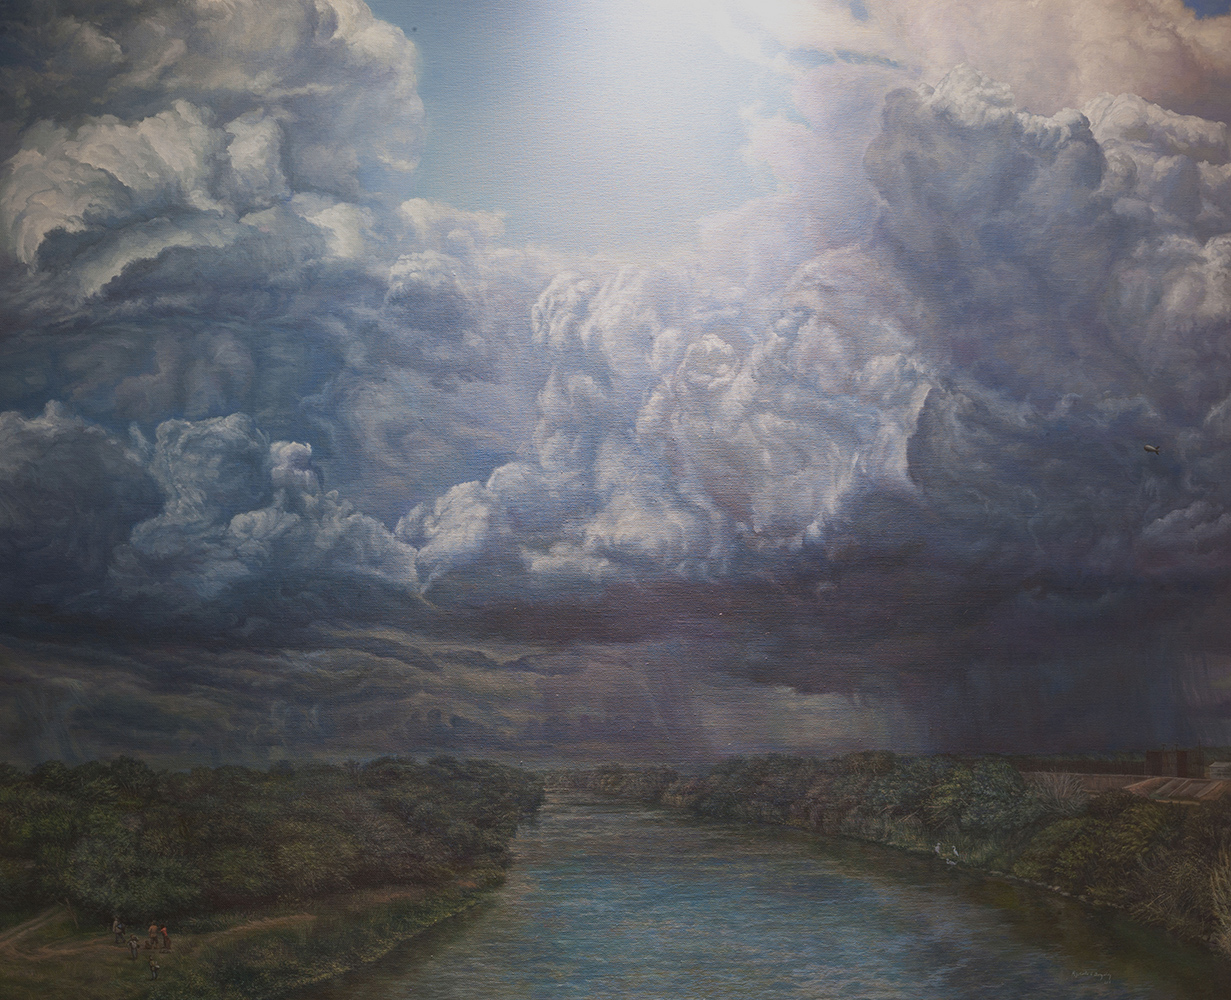  All that is Beneath The Heavens (La Ribera del Diablo), 2018 - Oil on linen - 5 x 6 ft